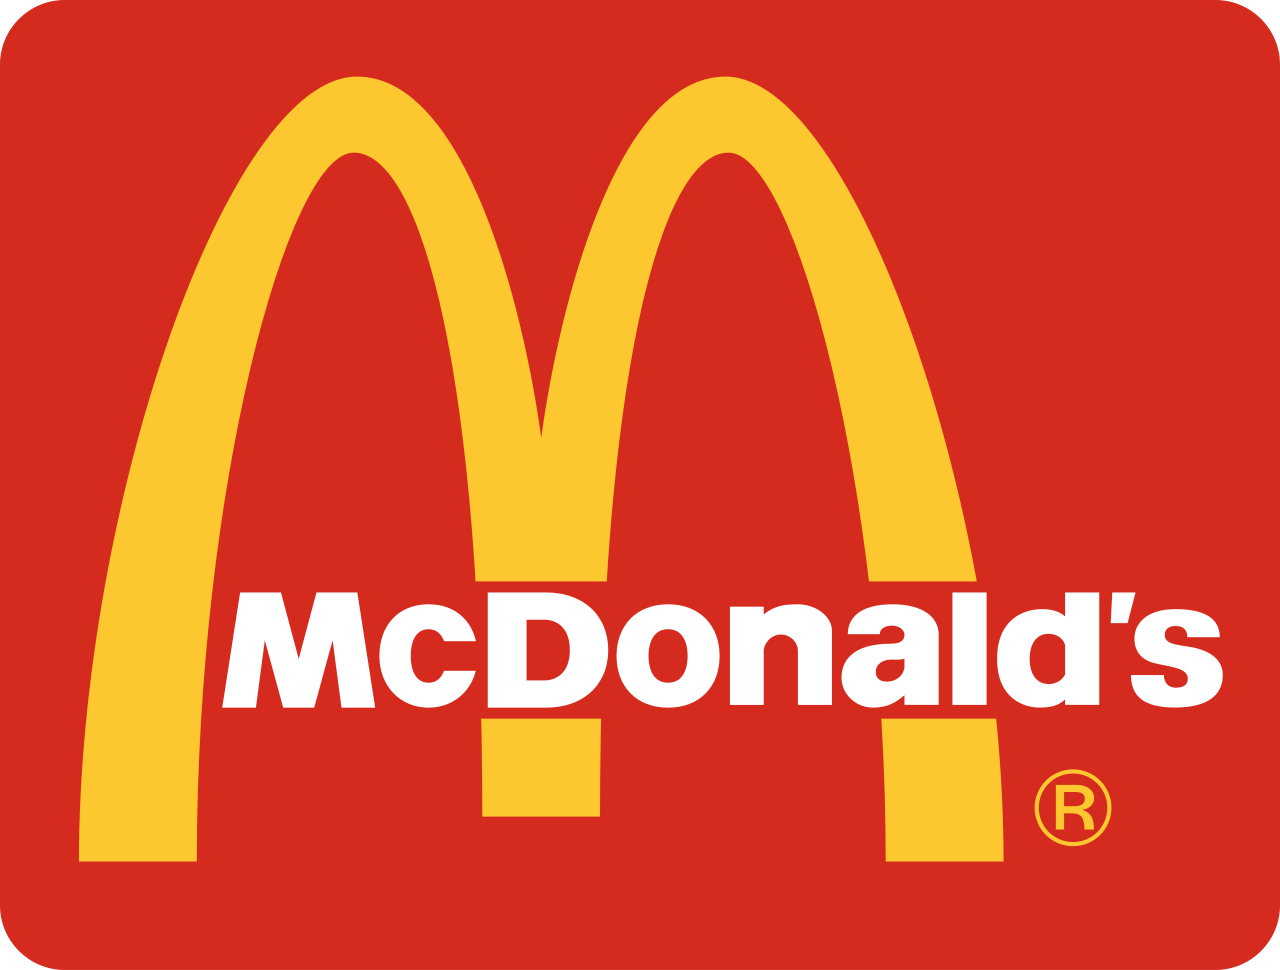 High Res Logo - McDonald's logo PNG images free download